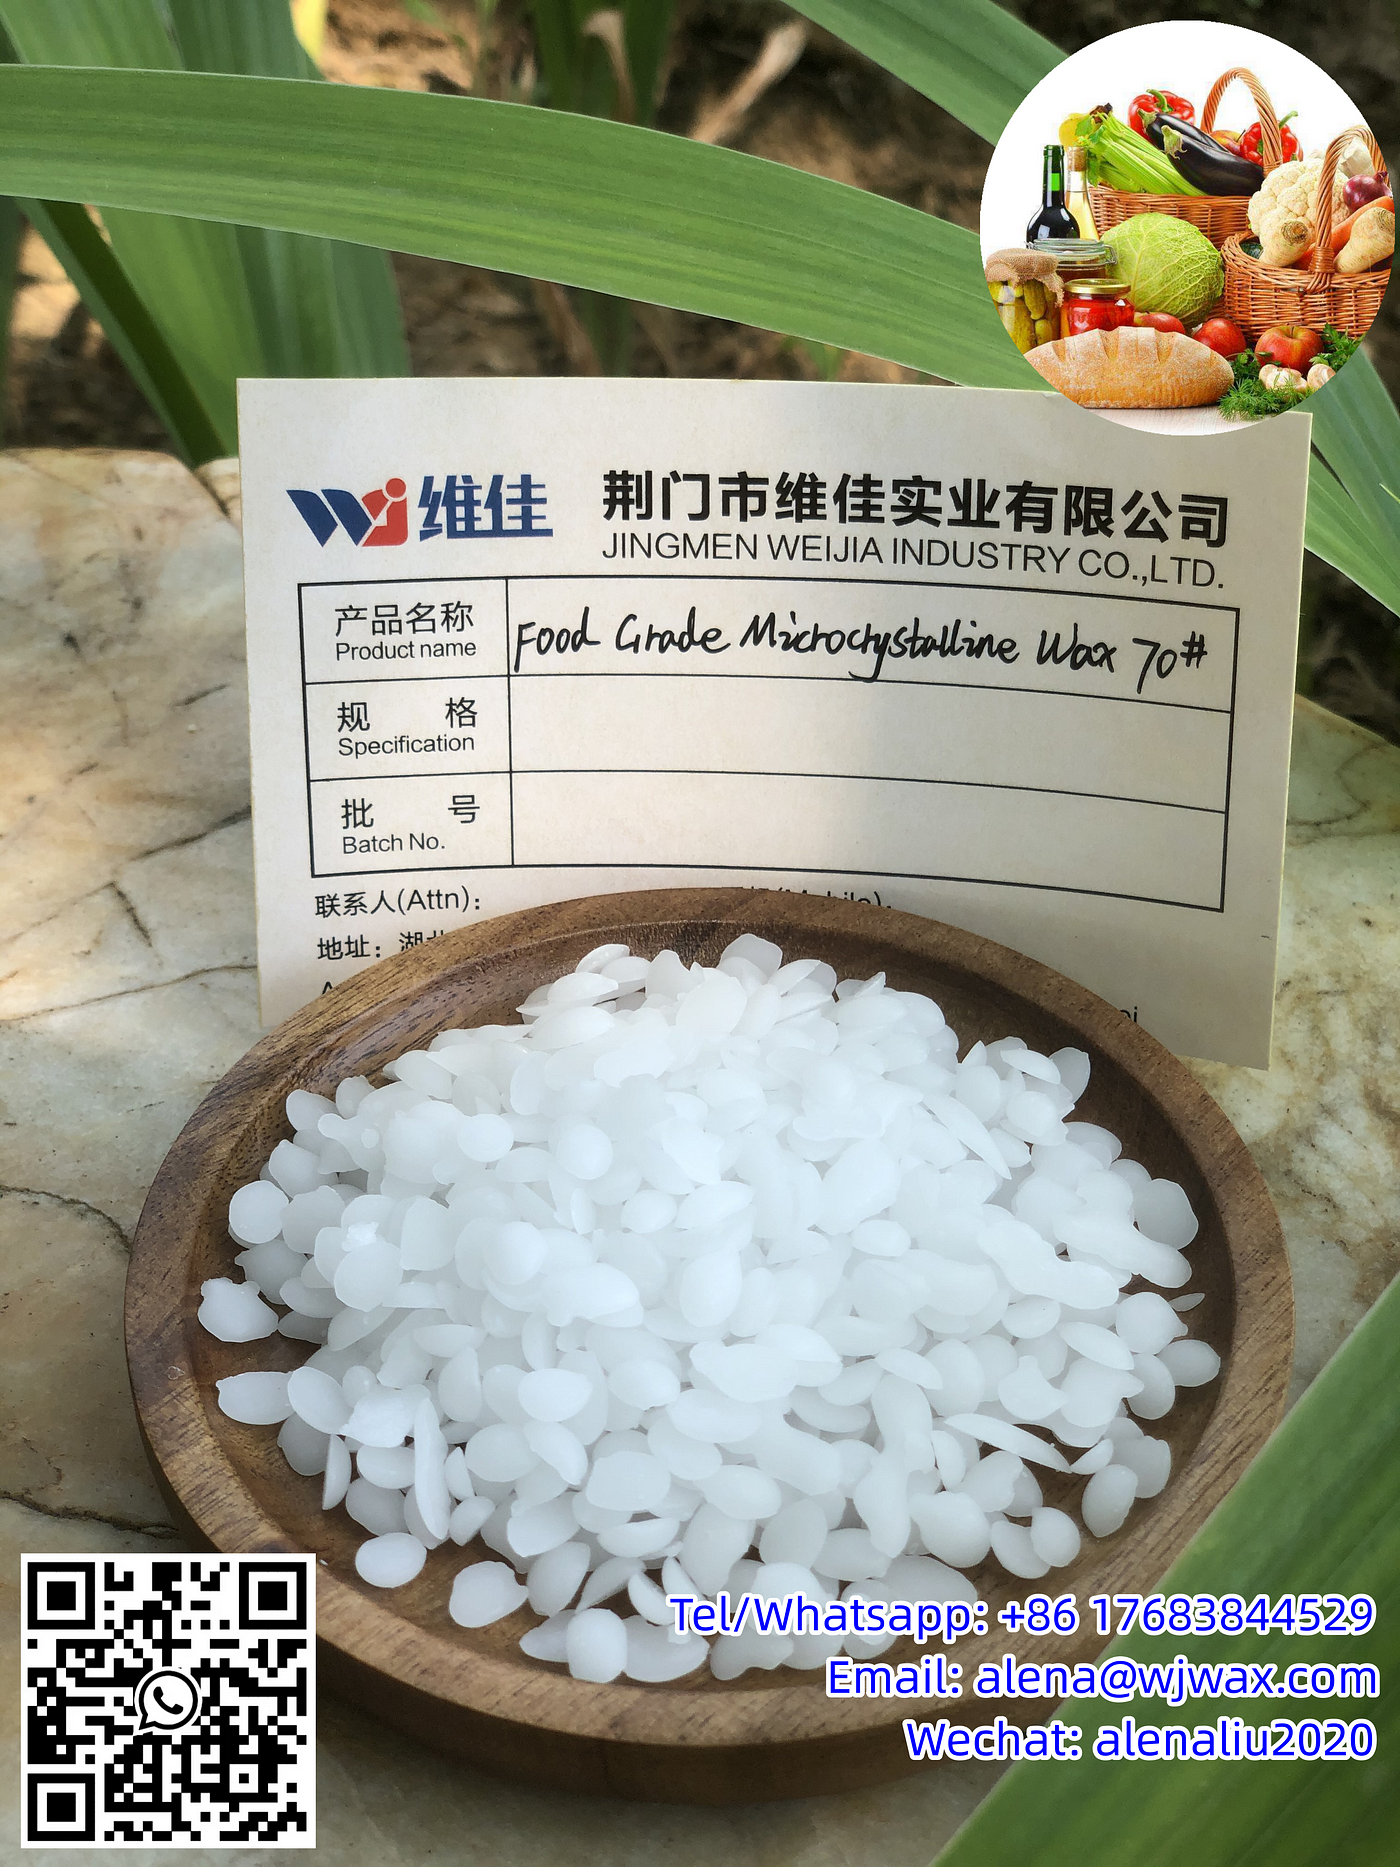 Food grade microcrystalline wax. Food grade microcrystalline wax is a…, by  Alena Liu